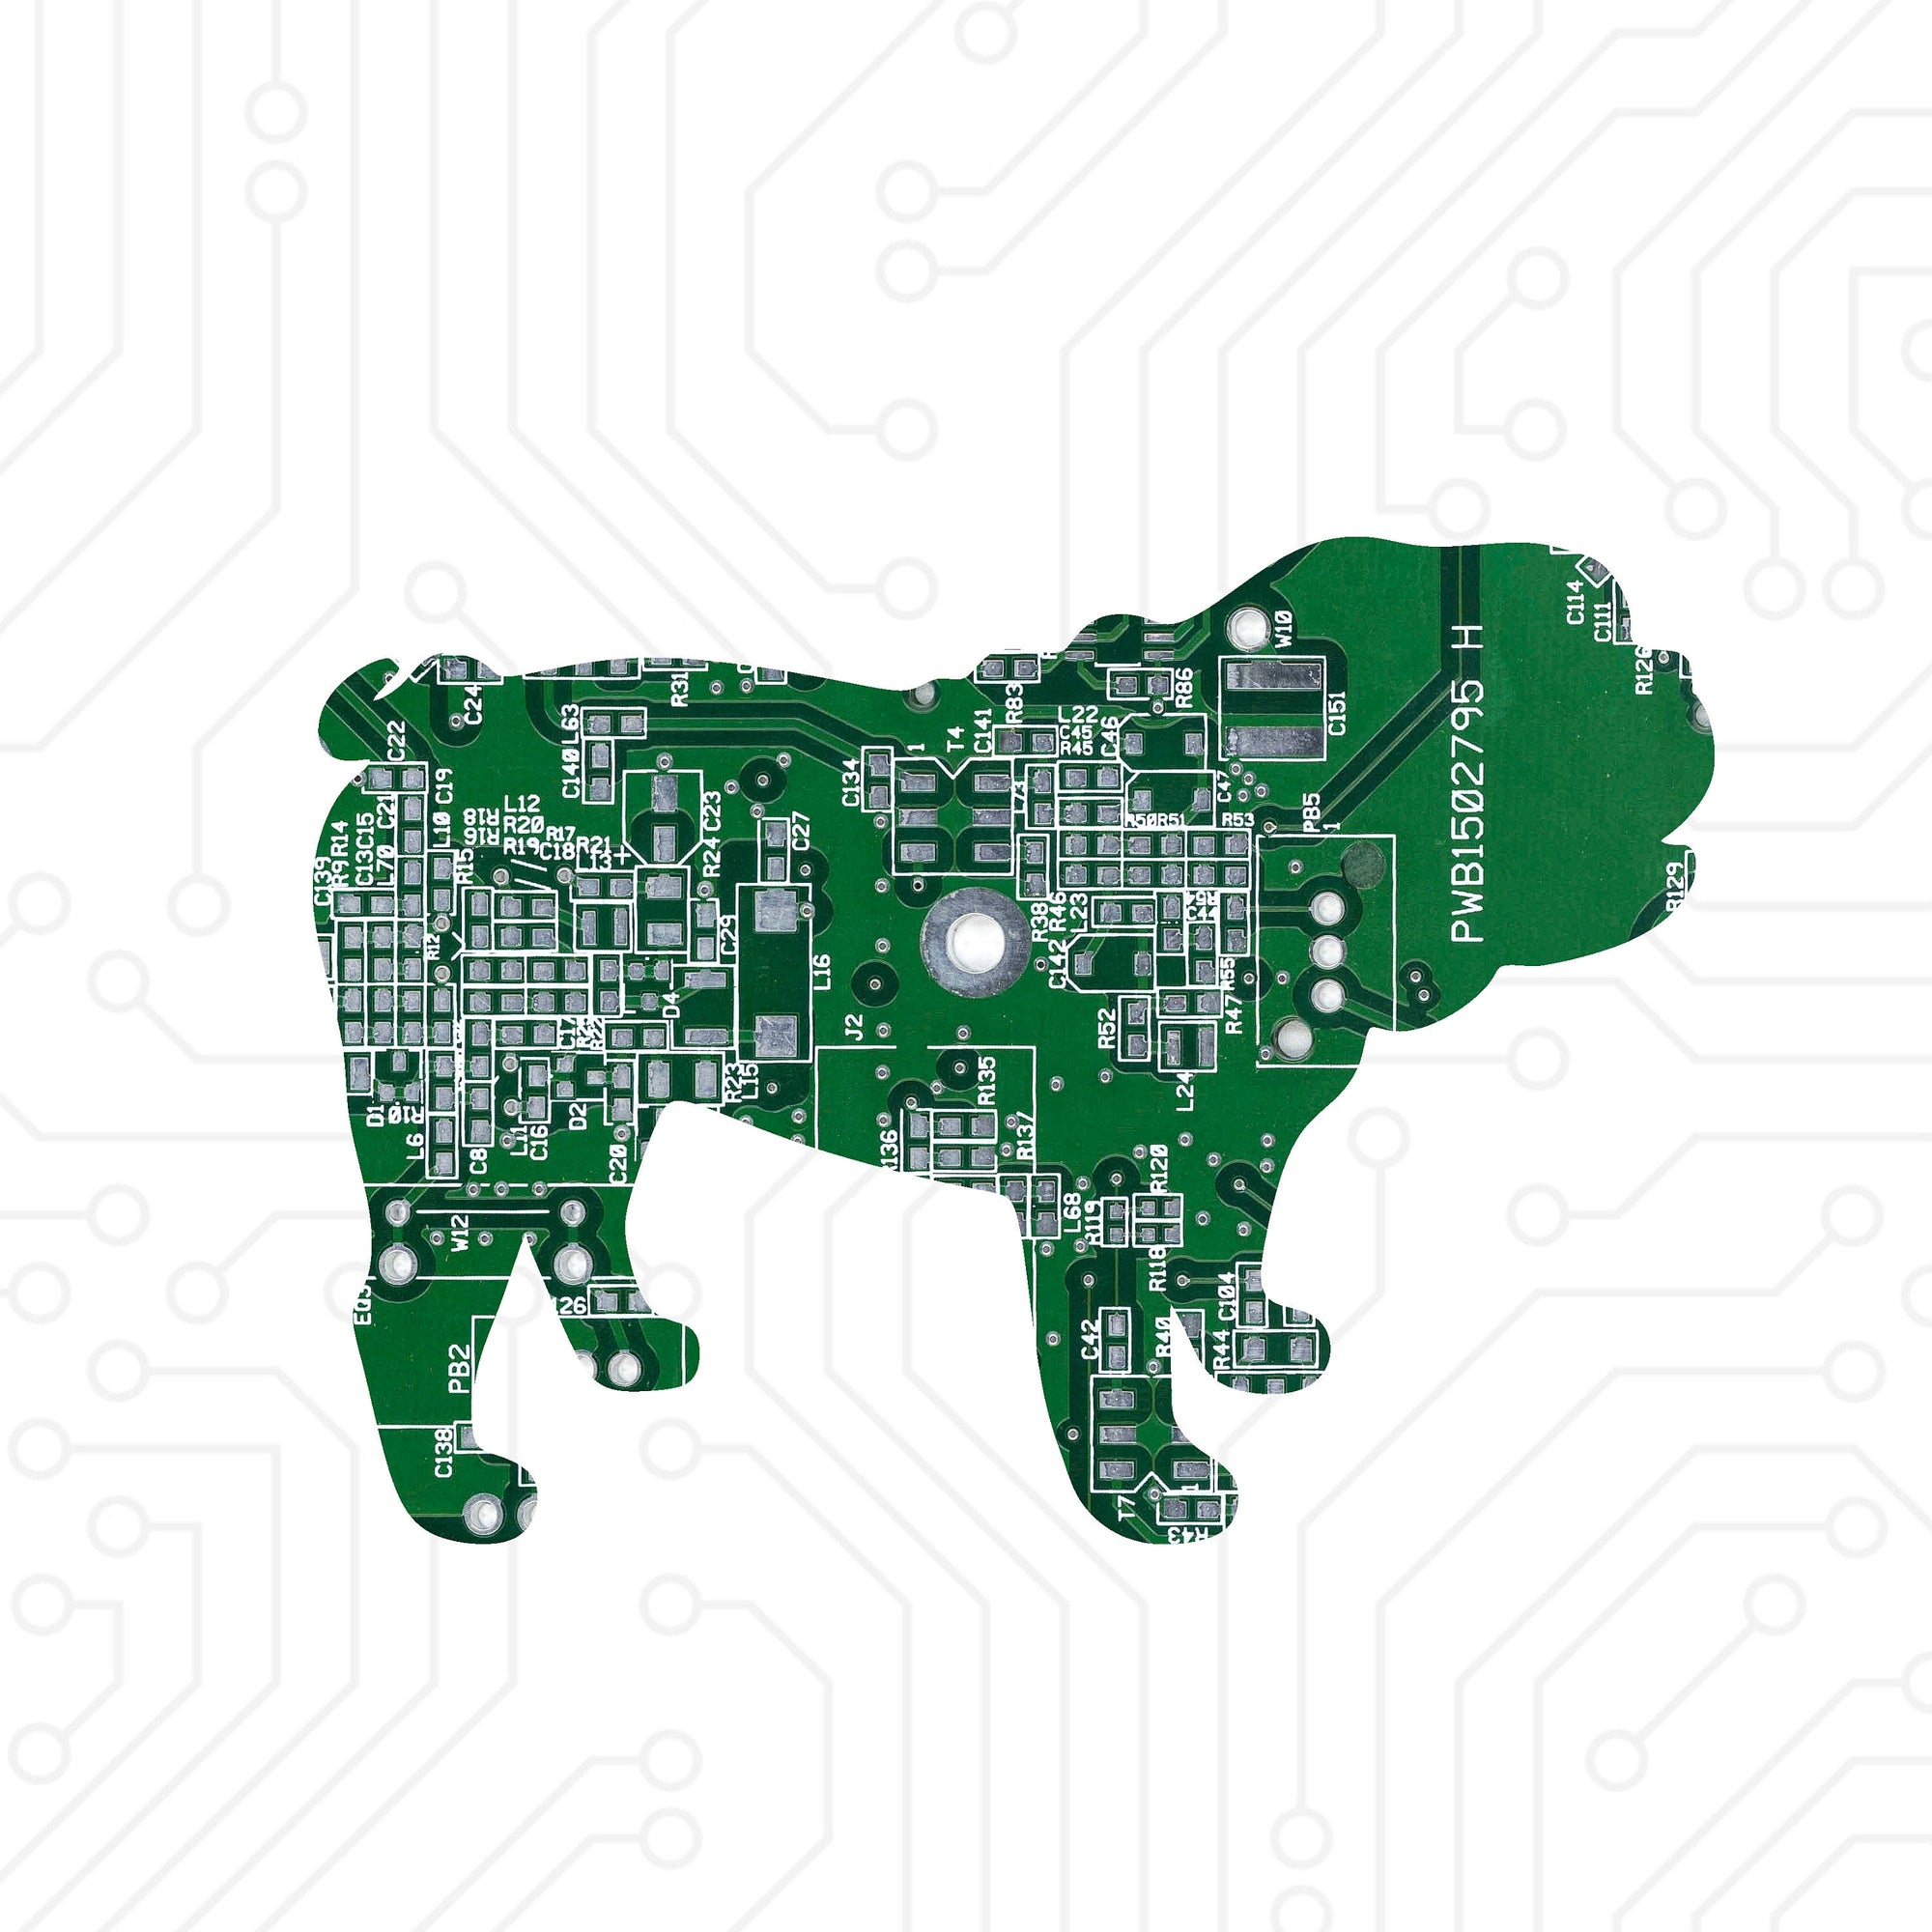 Bulldog - TechWears Ltd